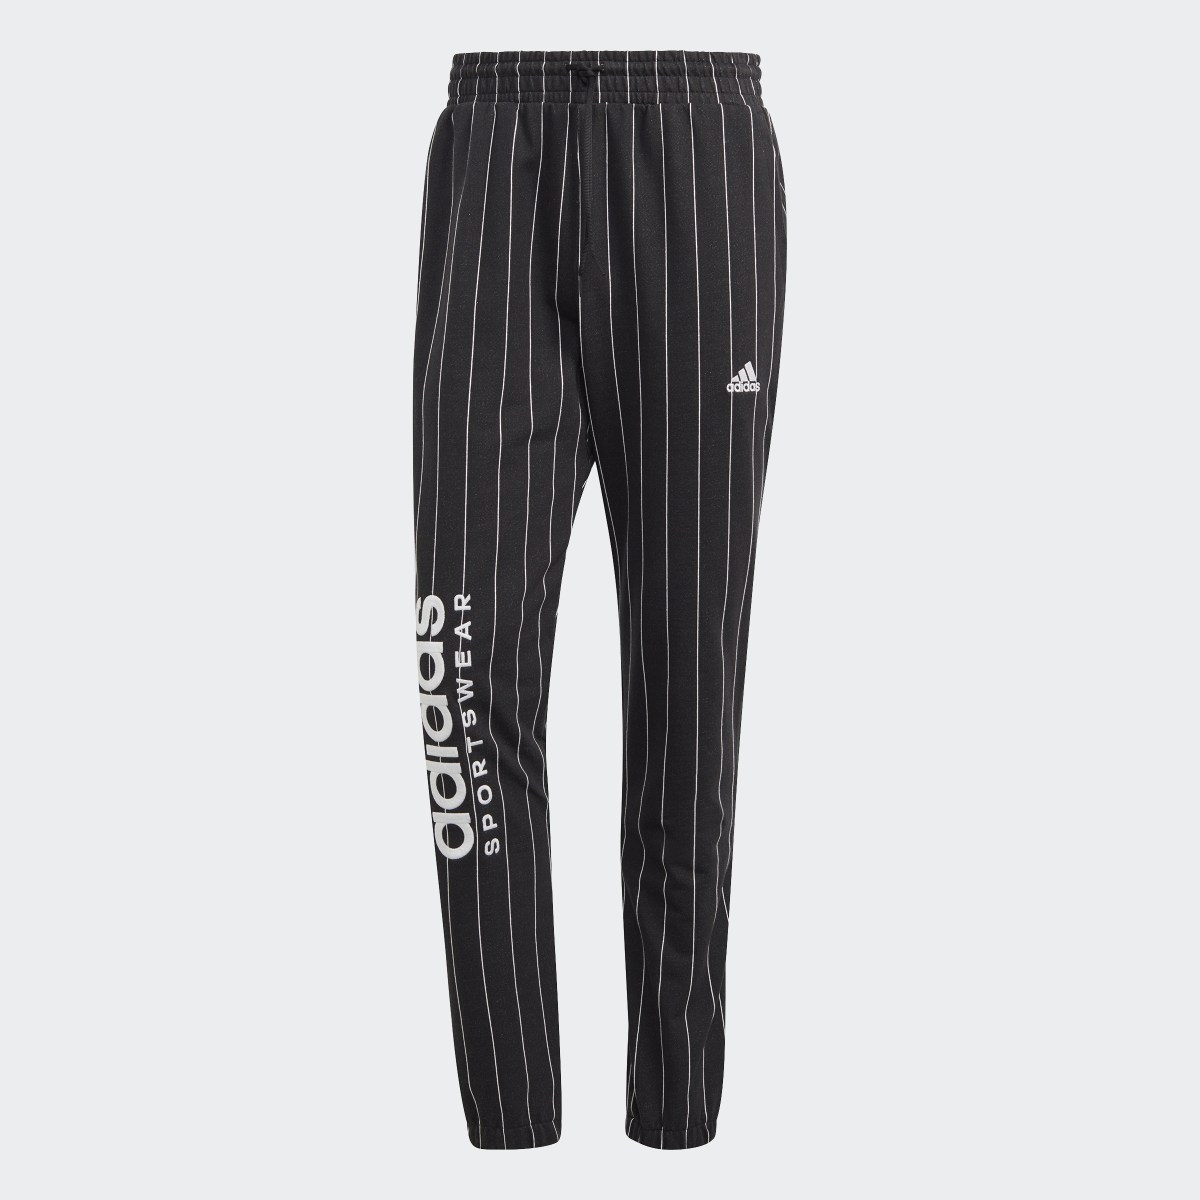 Adidas Pinstripe Fleece Pants. 4